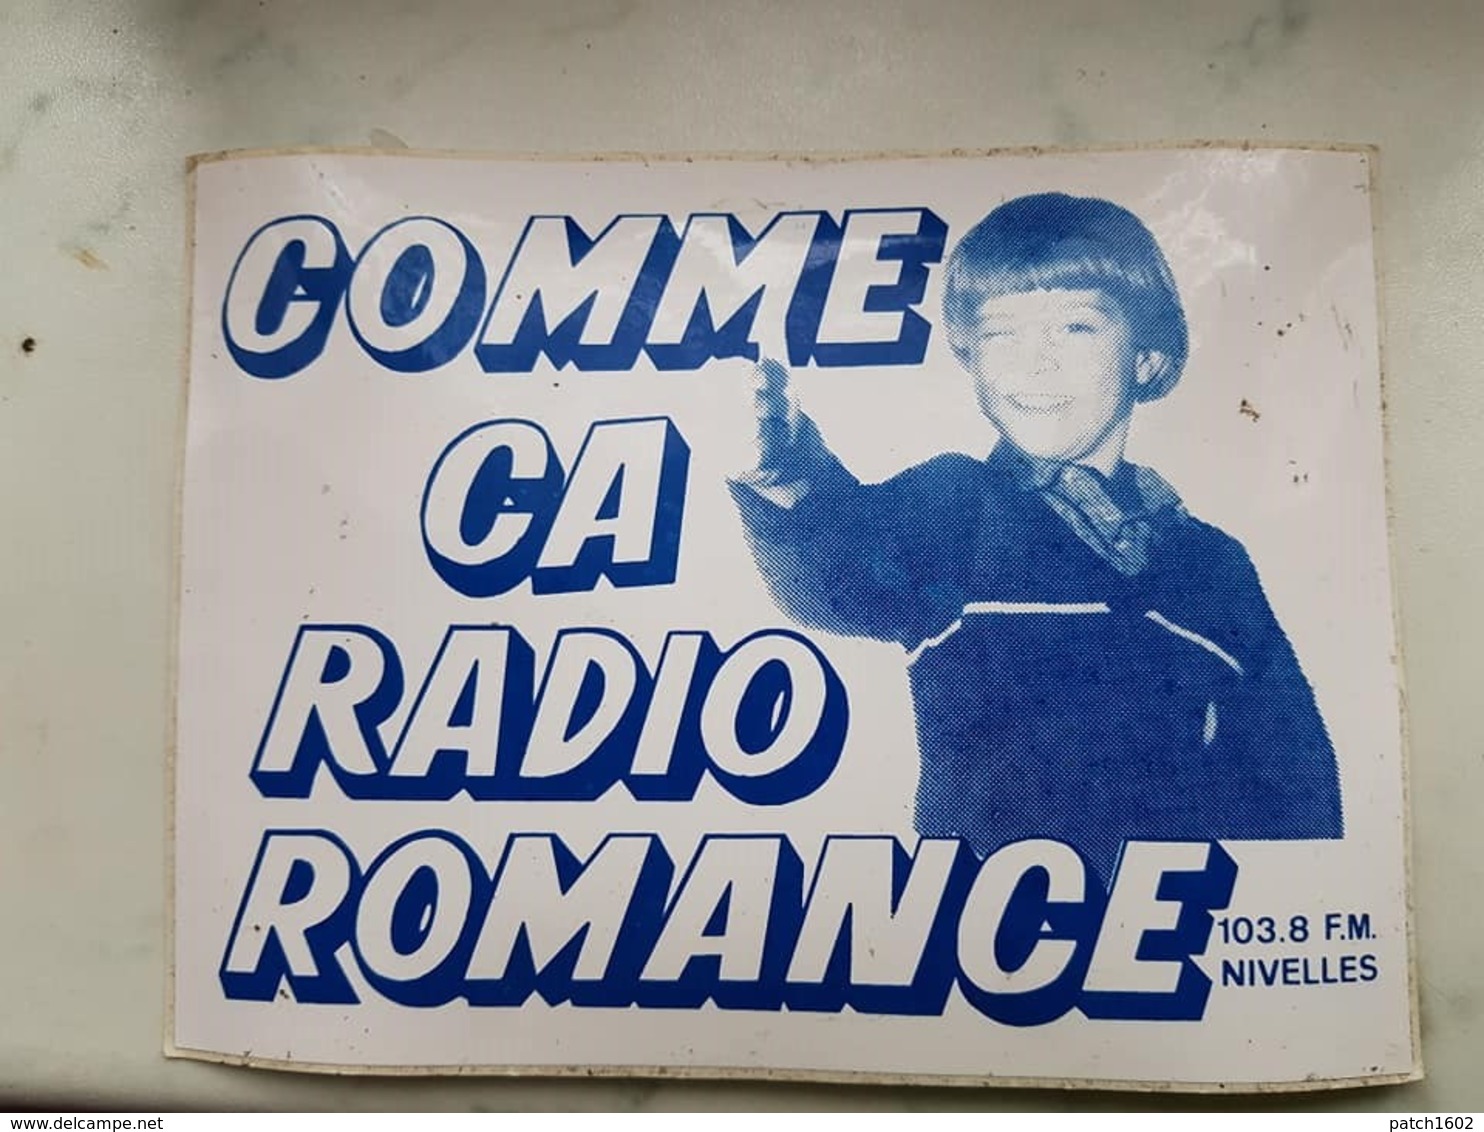 Nivelles Radio Romance103,8 FM - Stickers